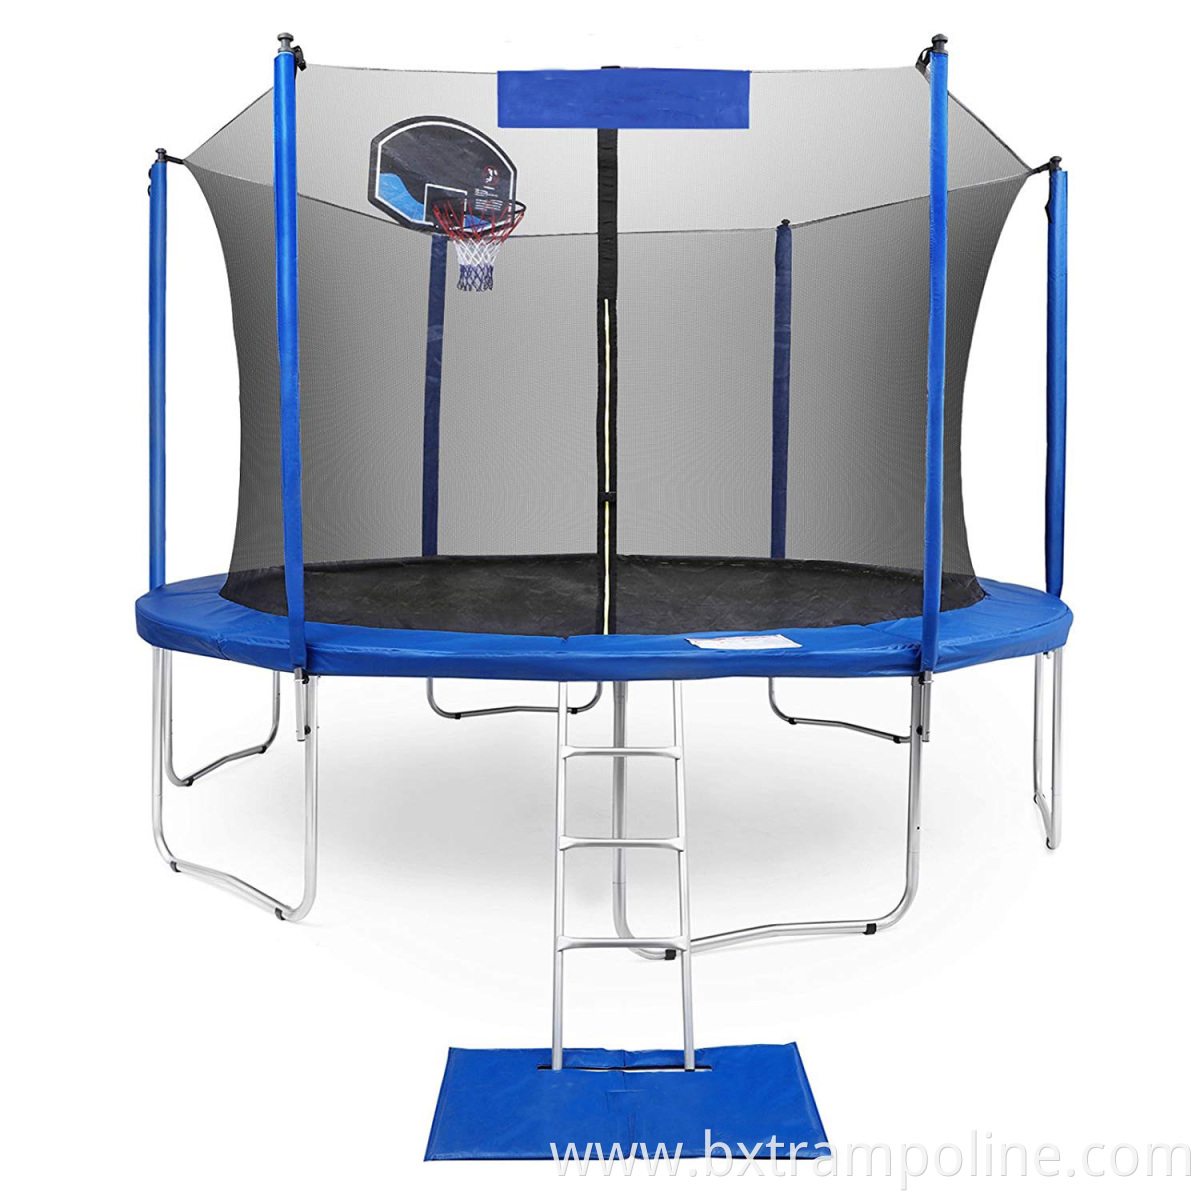 high quality buy kids gymnastic folding big trampoline prices